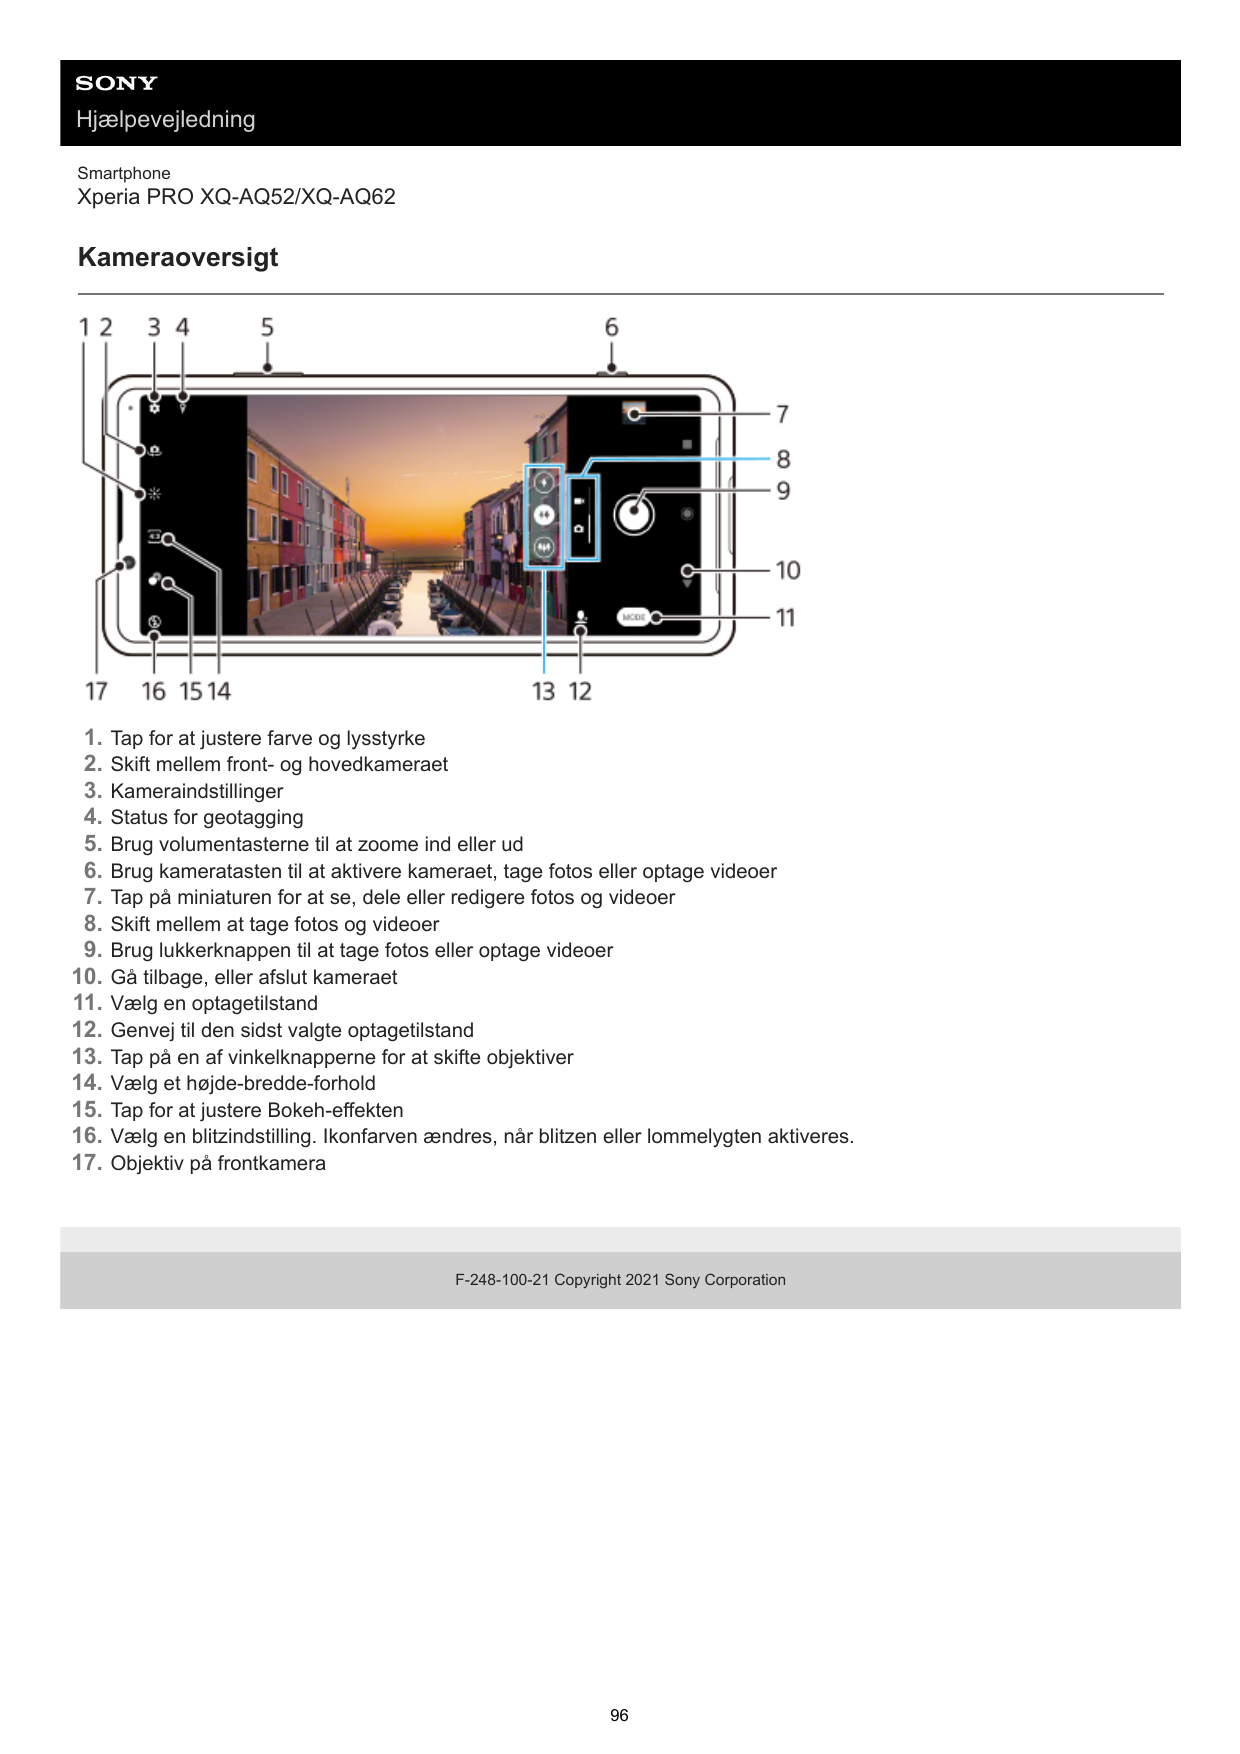 HjælpevejledningSmartphoneXperia PRO XQ-AQ52/XQ-AQ62Kameraoversigt1.2.3.4.5.6.7.8.9.10.11.12.13.14.15.16.17.Tap for at justere f